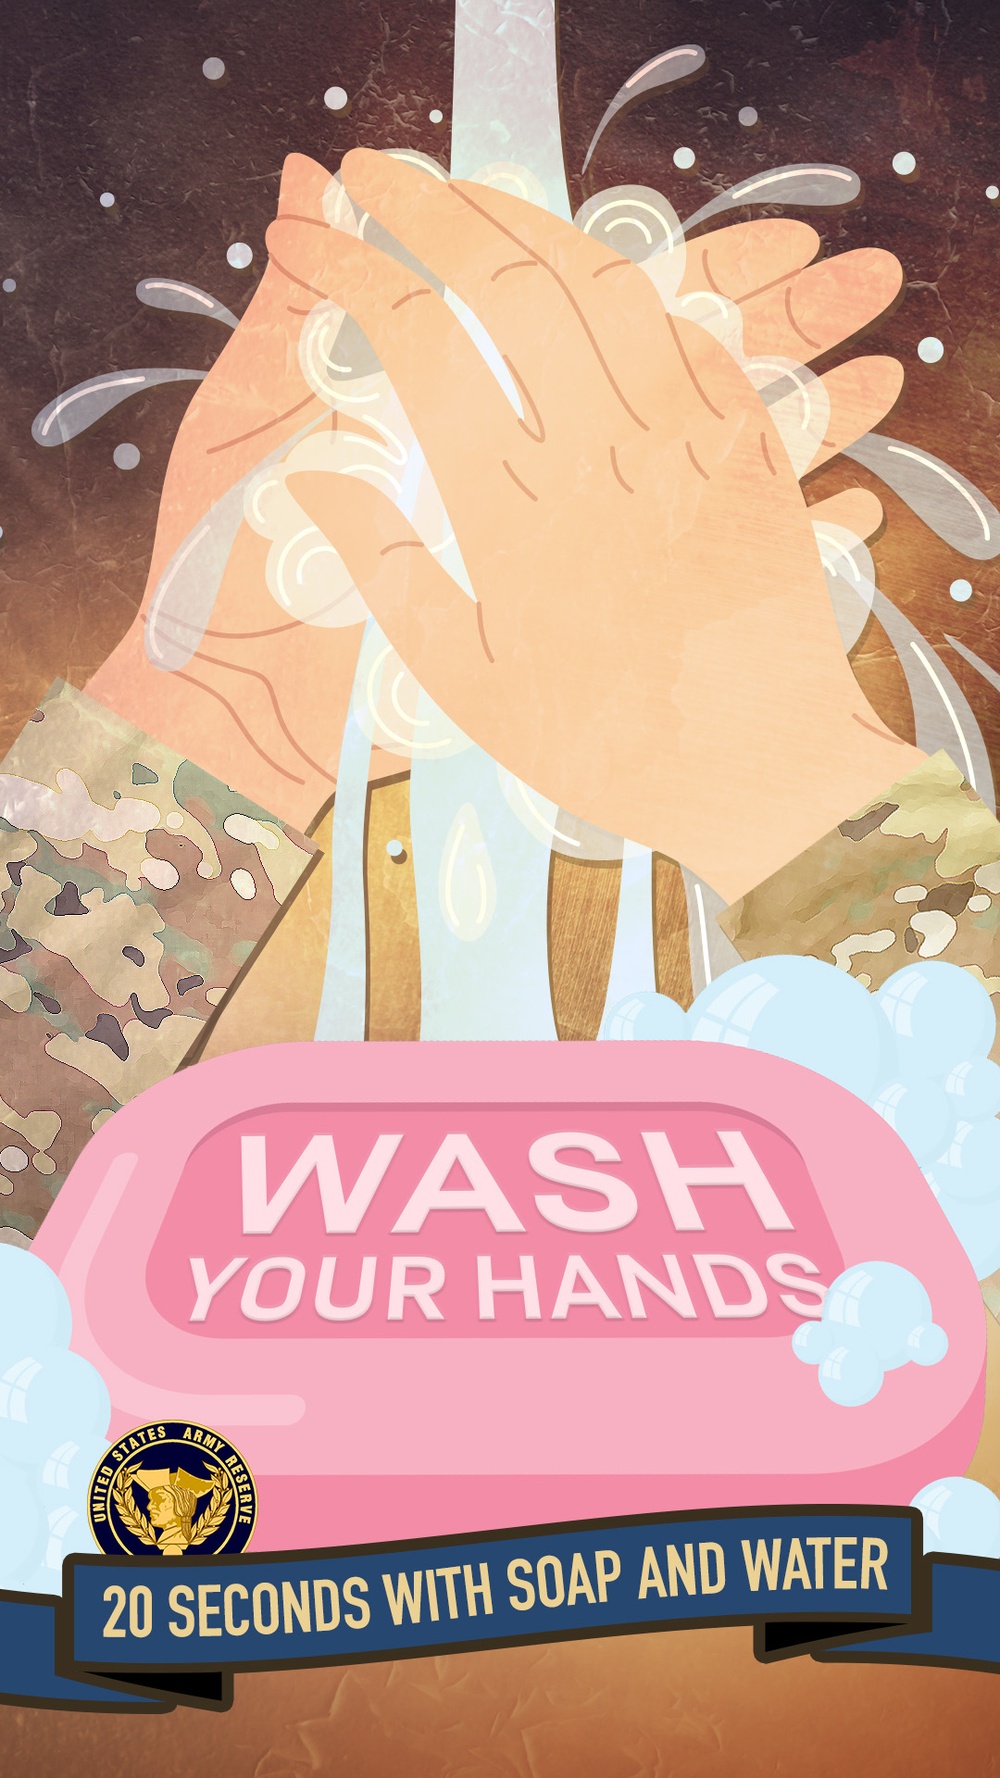 U.S. Army Reserve Graphic: Hand washing